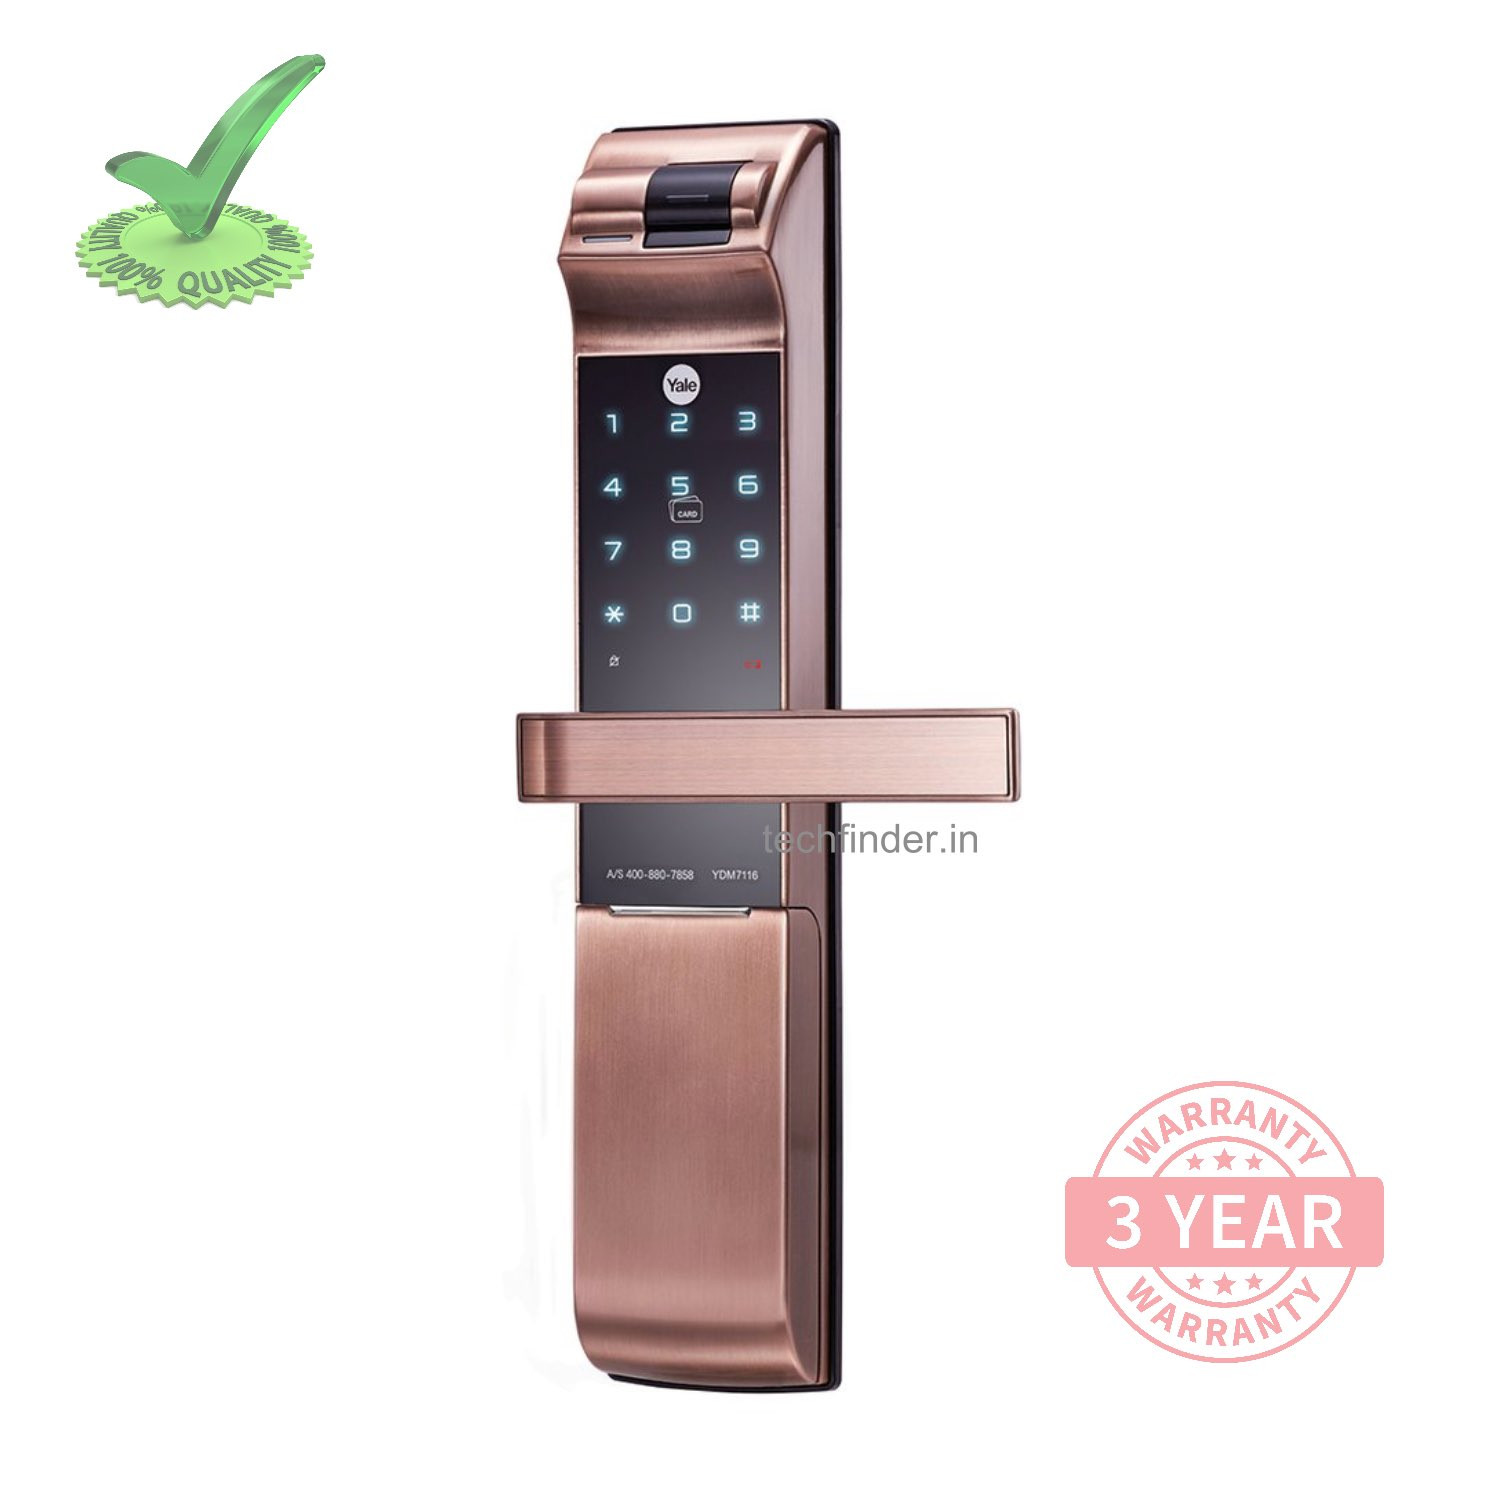 Yale YDM 7116 Smart Door Lock